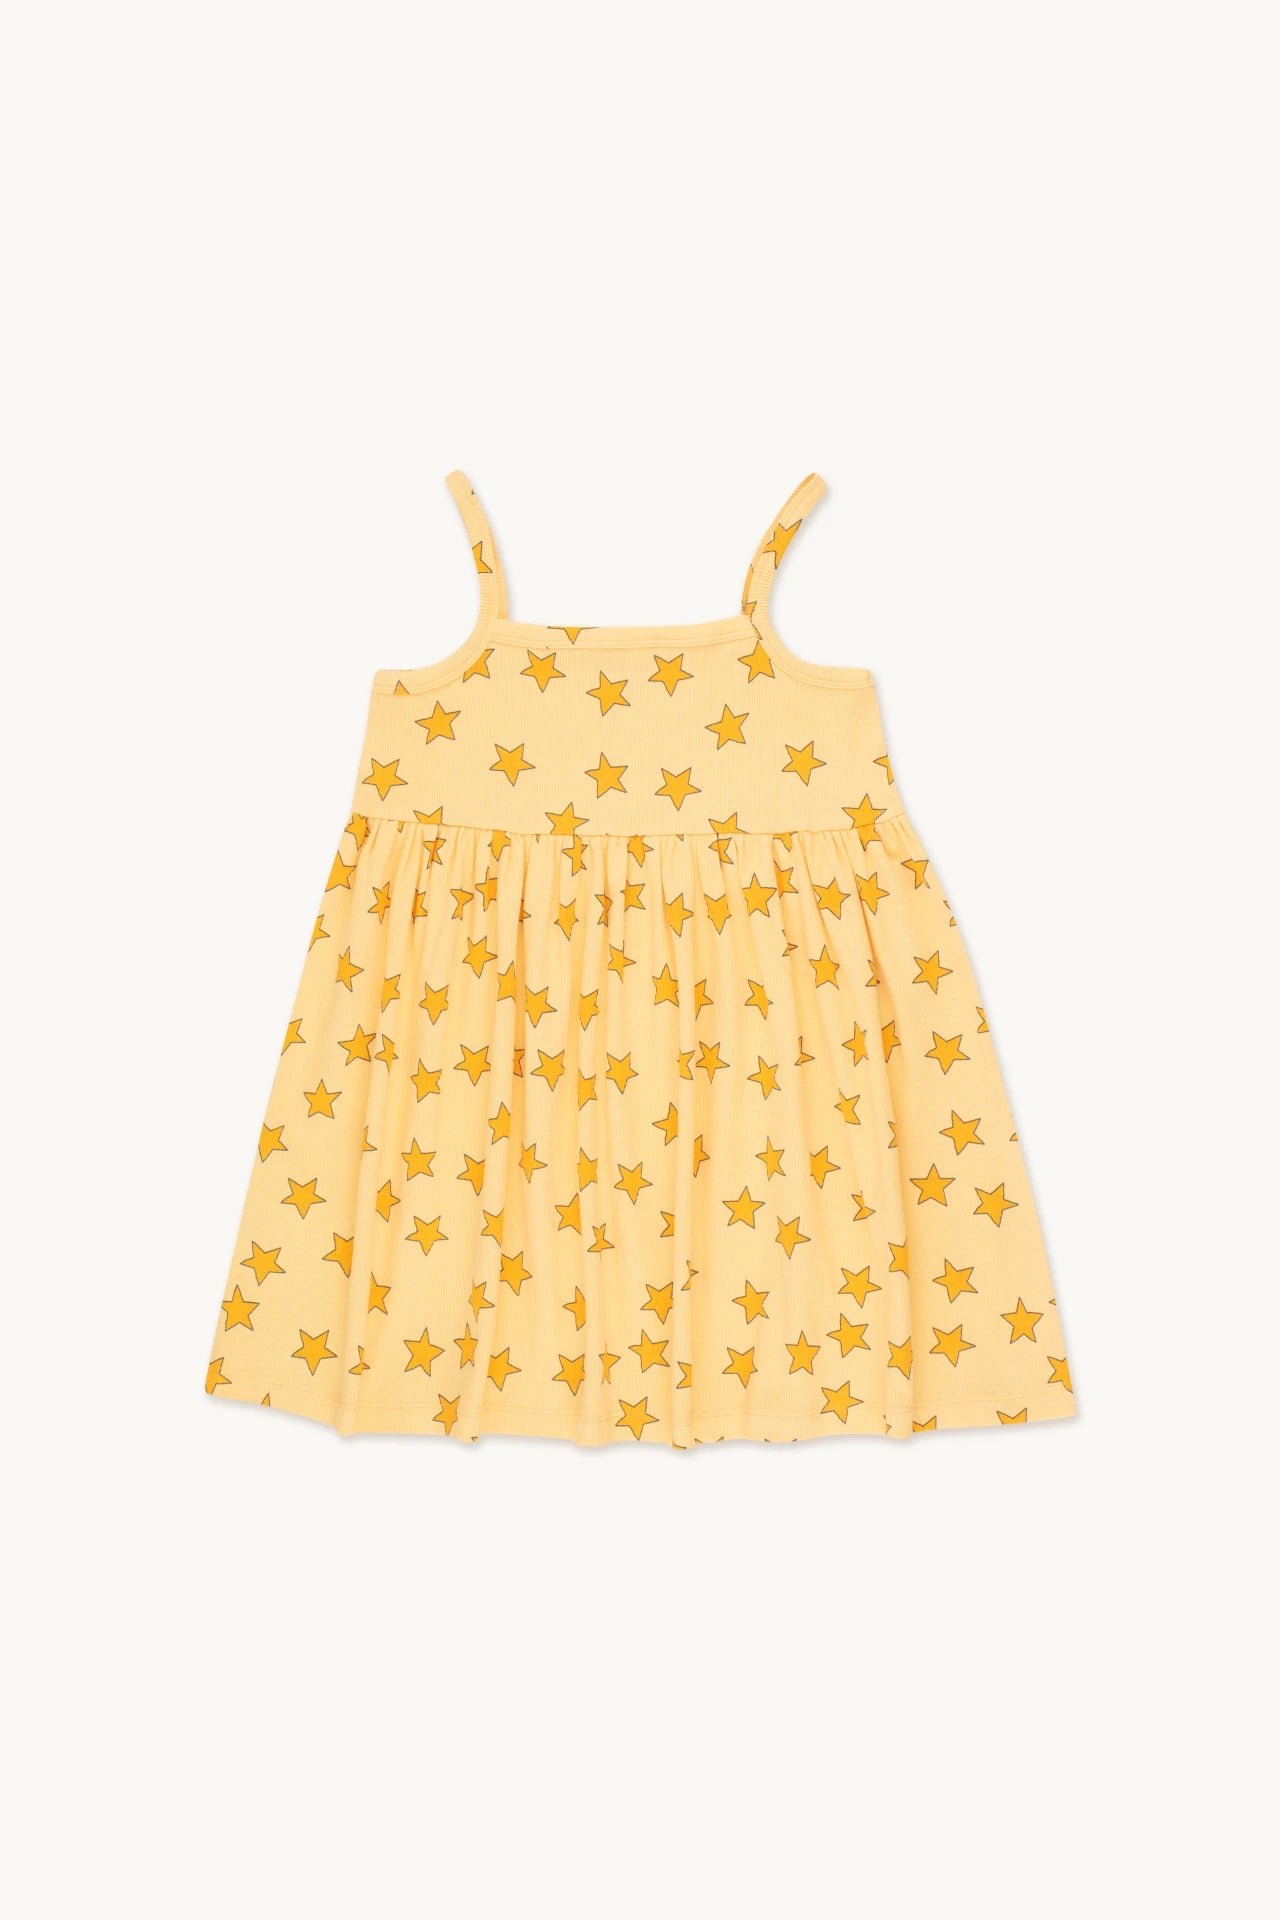 Tiny Cottons - Star dress